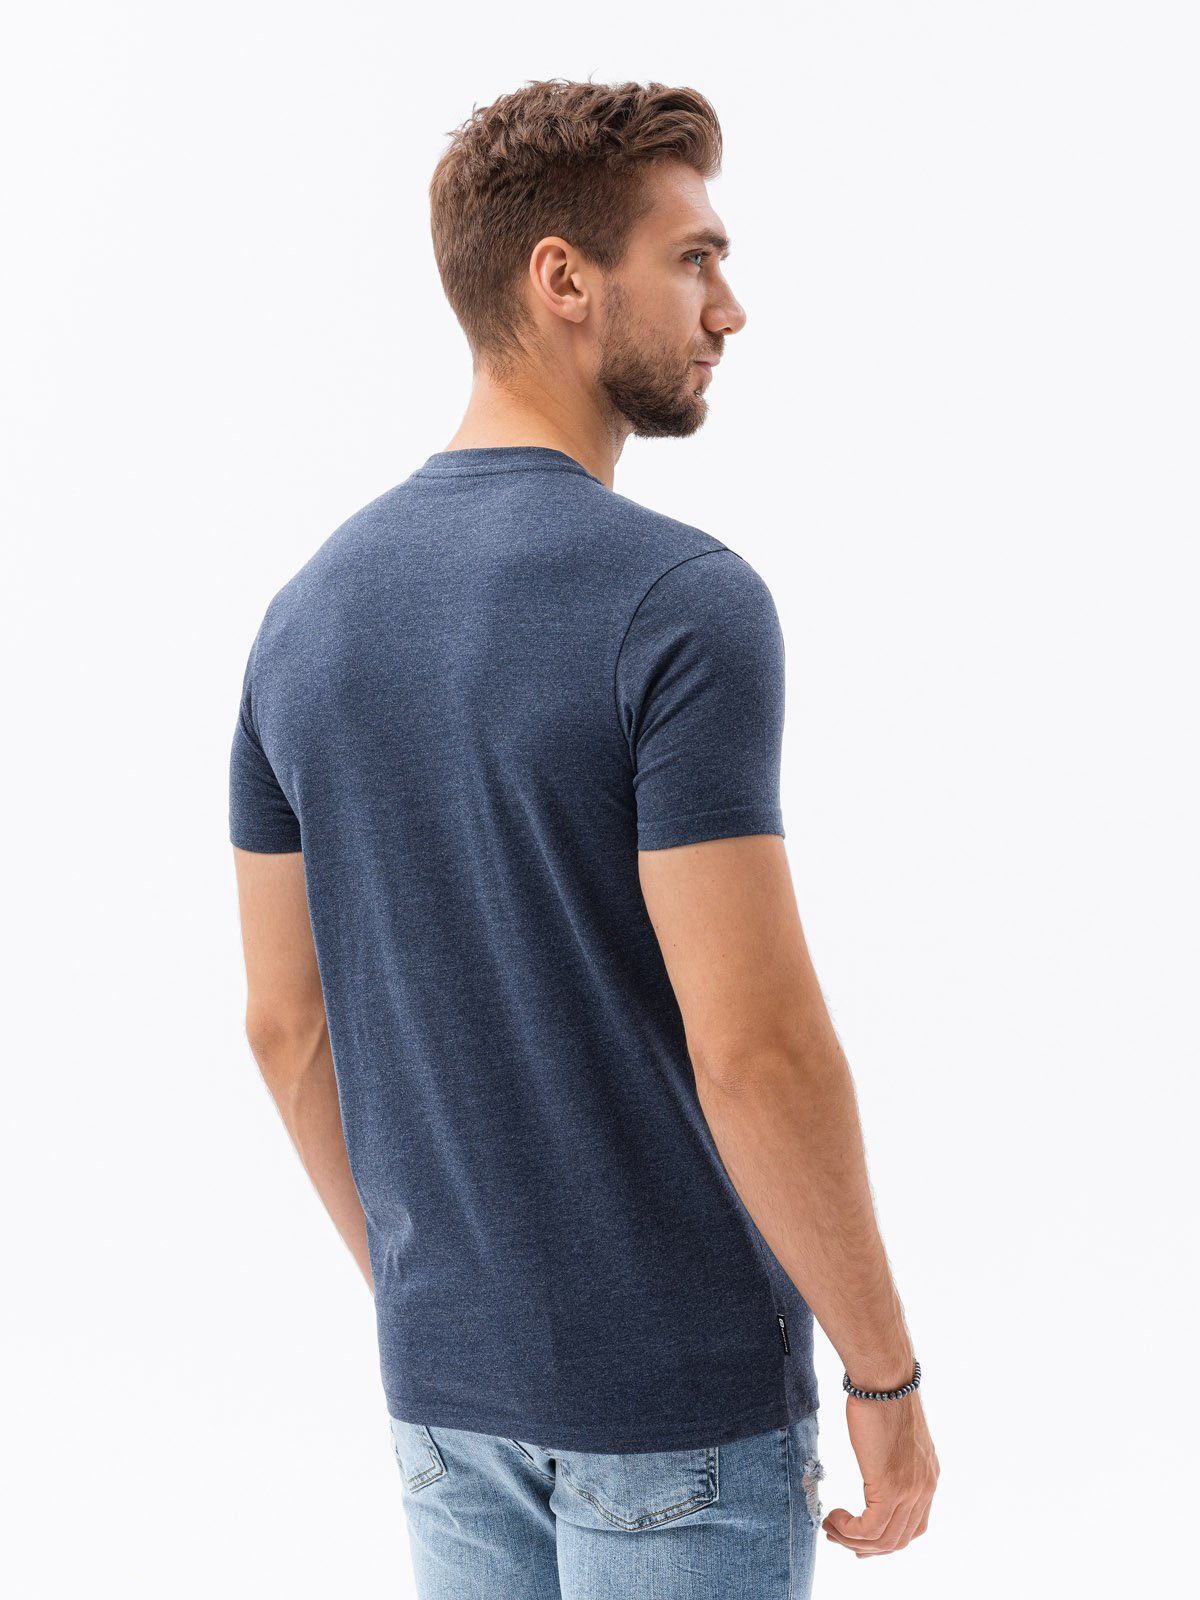 OMBRE T-Shirt L marineblau Unifarbenes Herren-T-Shirt S1390 -